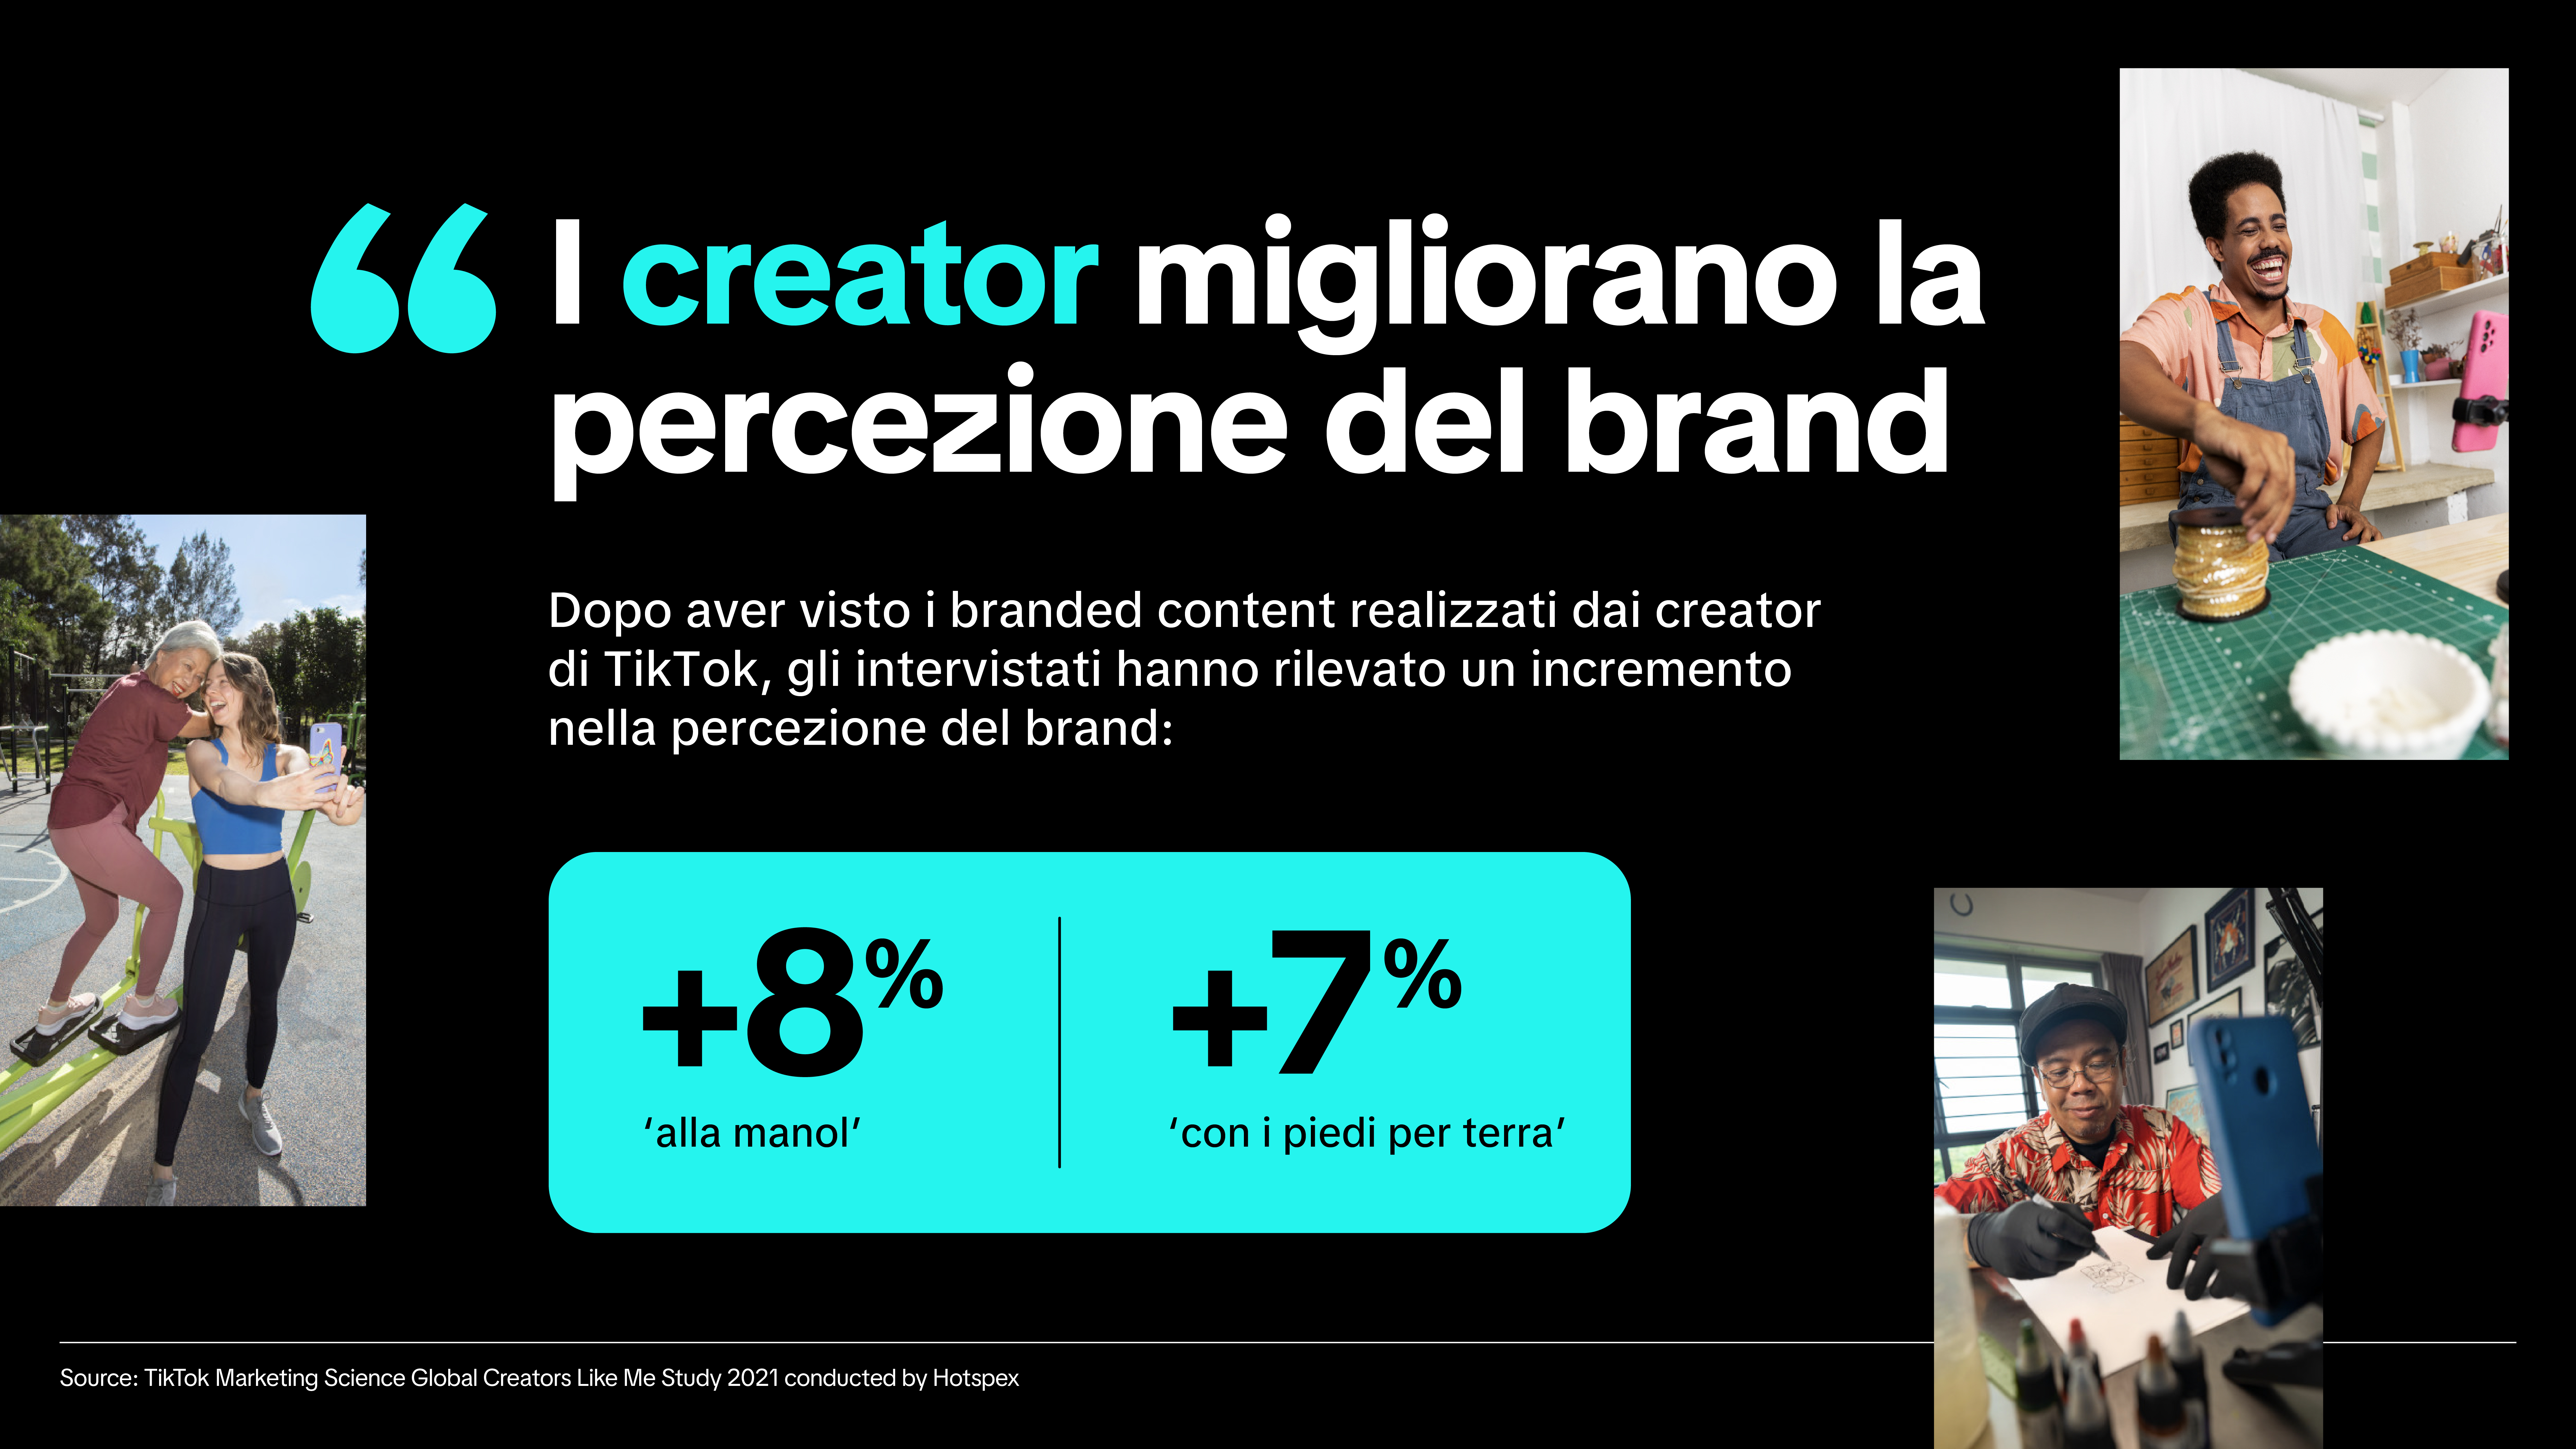 Creators improve brand perceptions